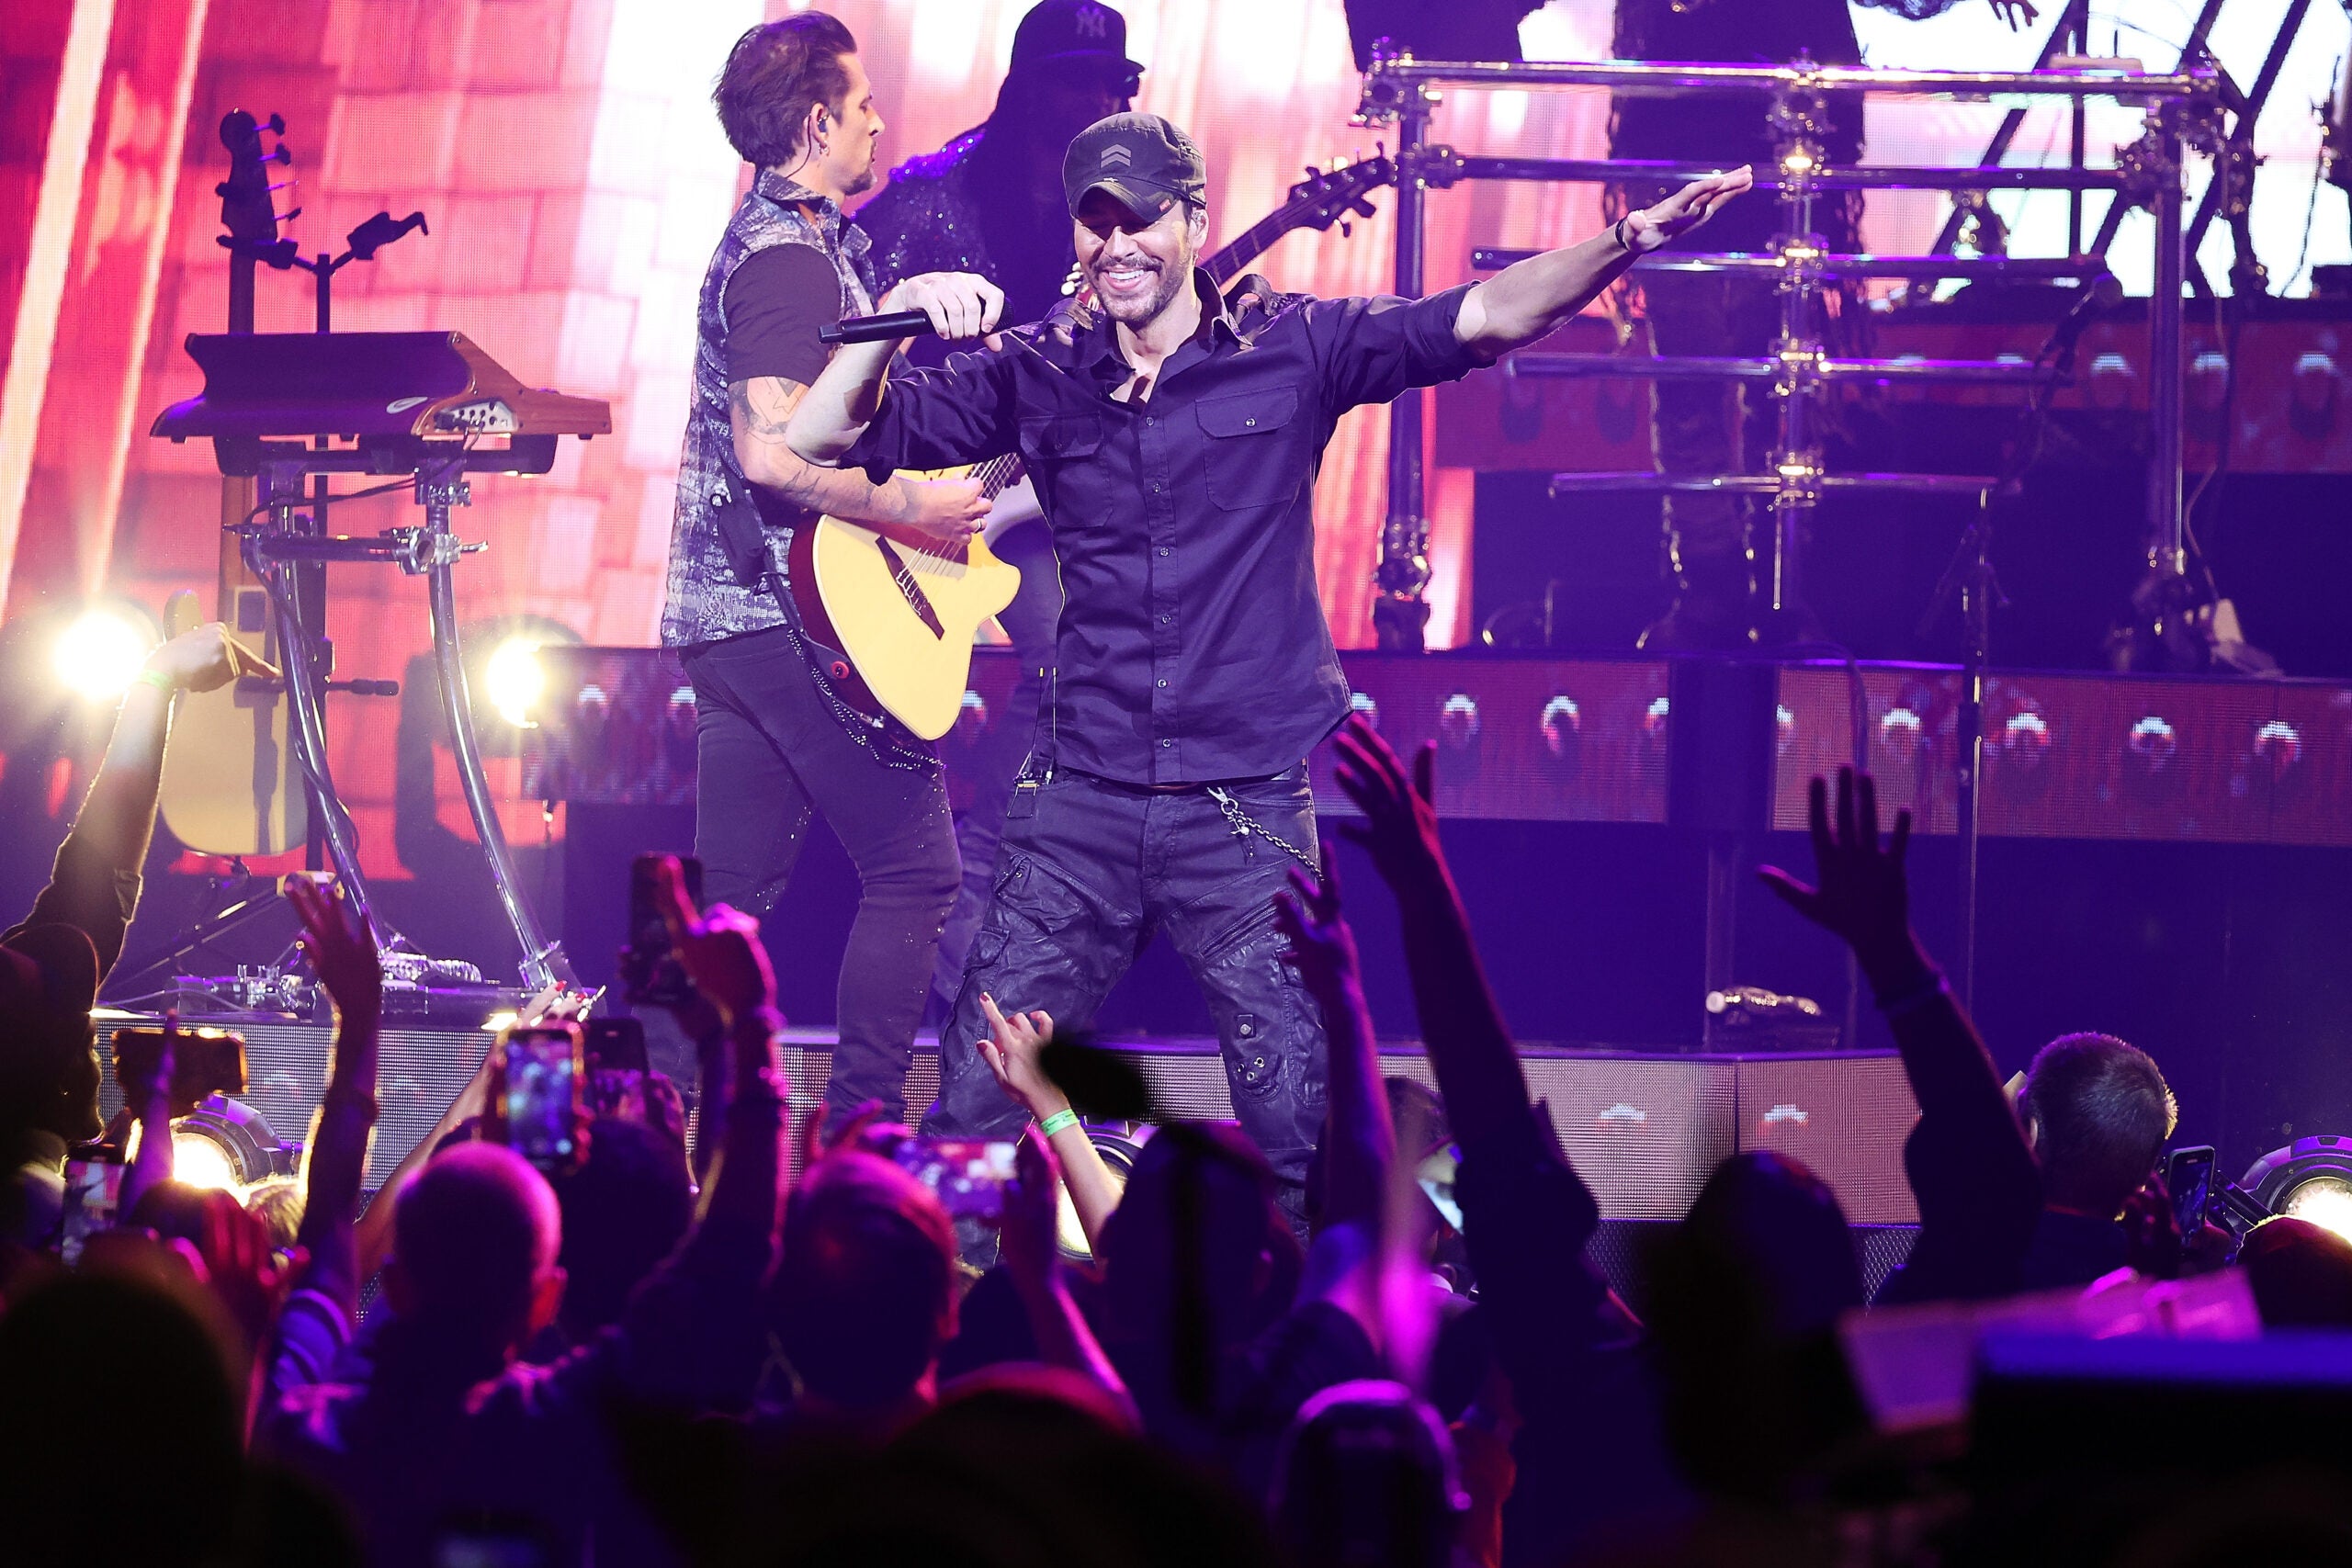 Enrique Iglesias, Ricky Martin, and Pitbull Announce “The Trilogy Tour” 